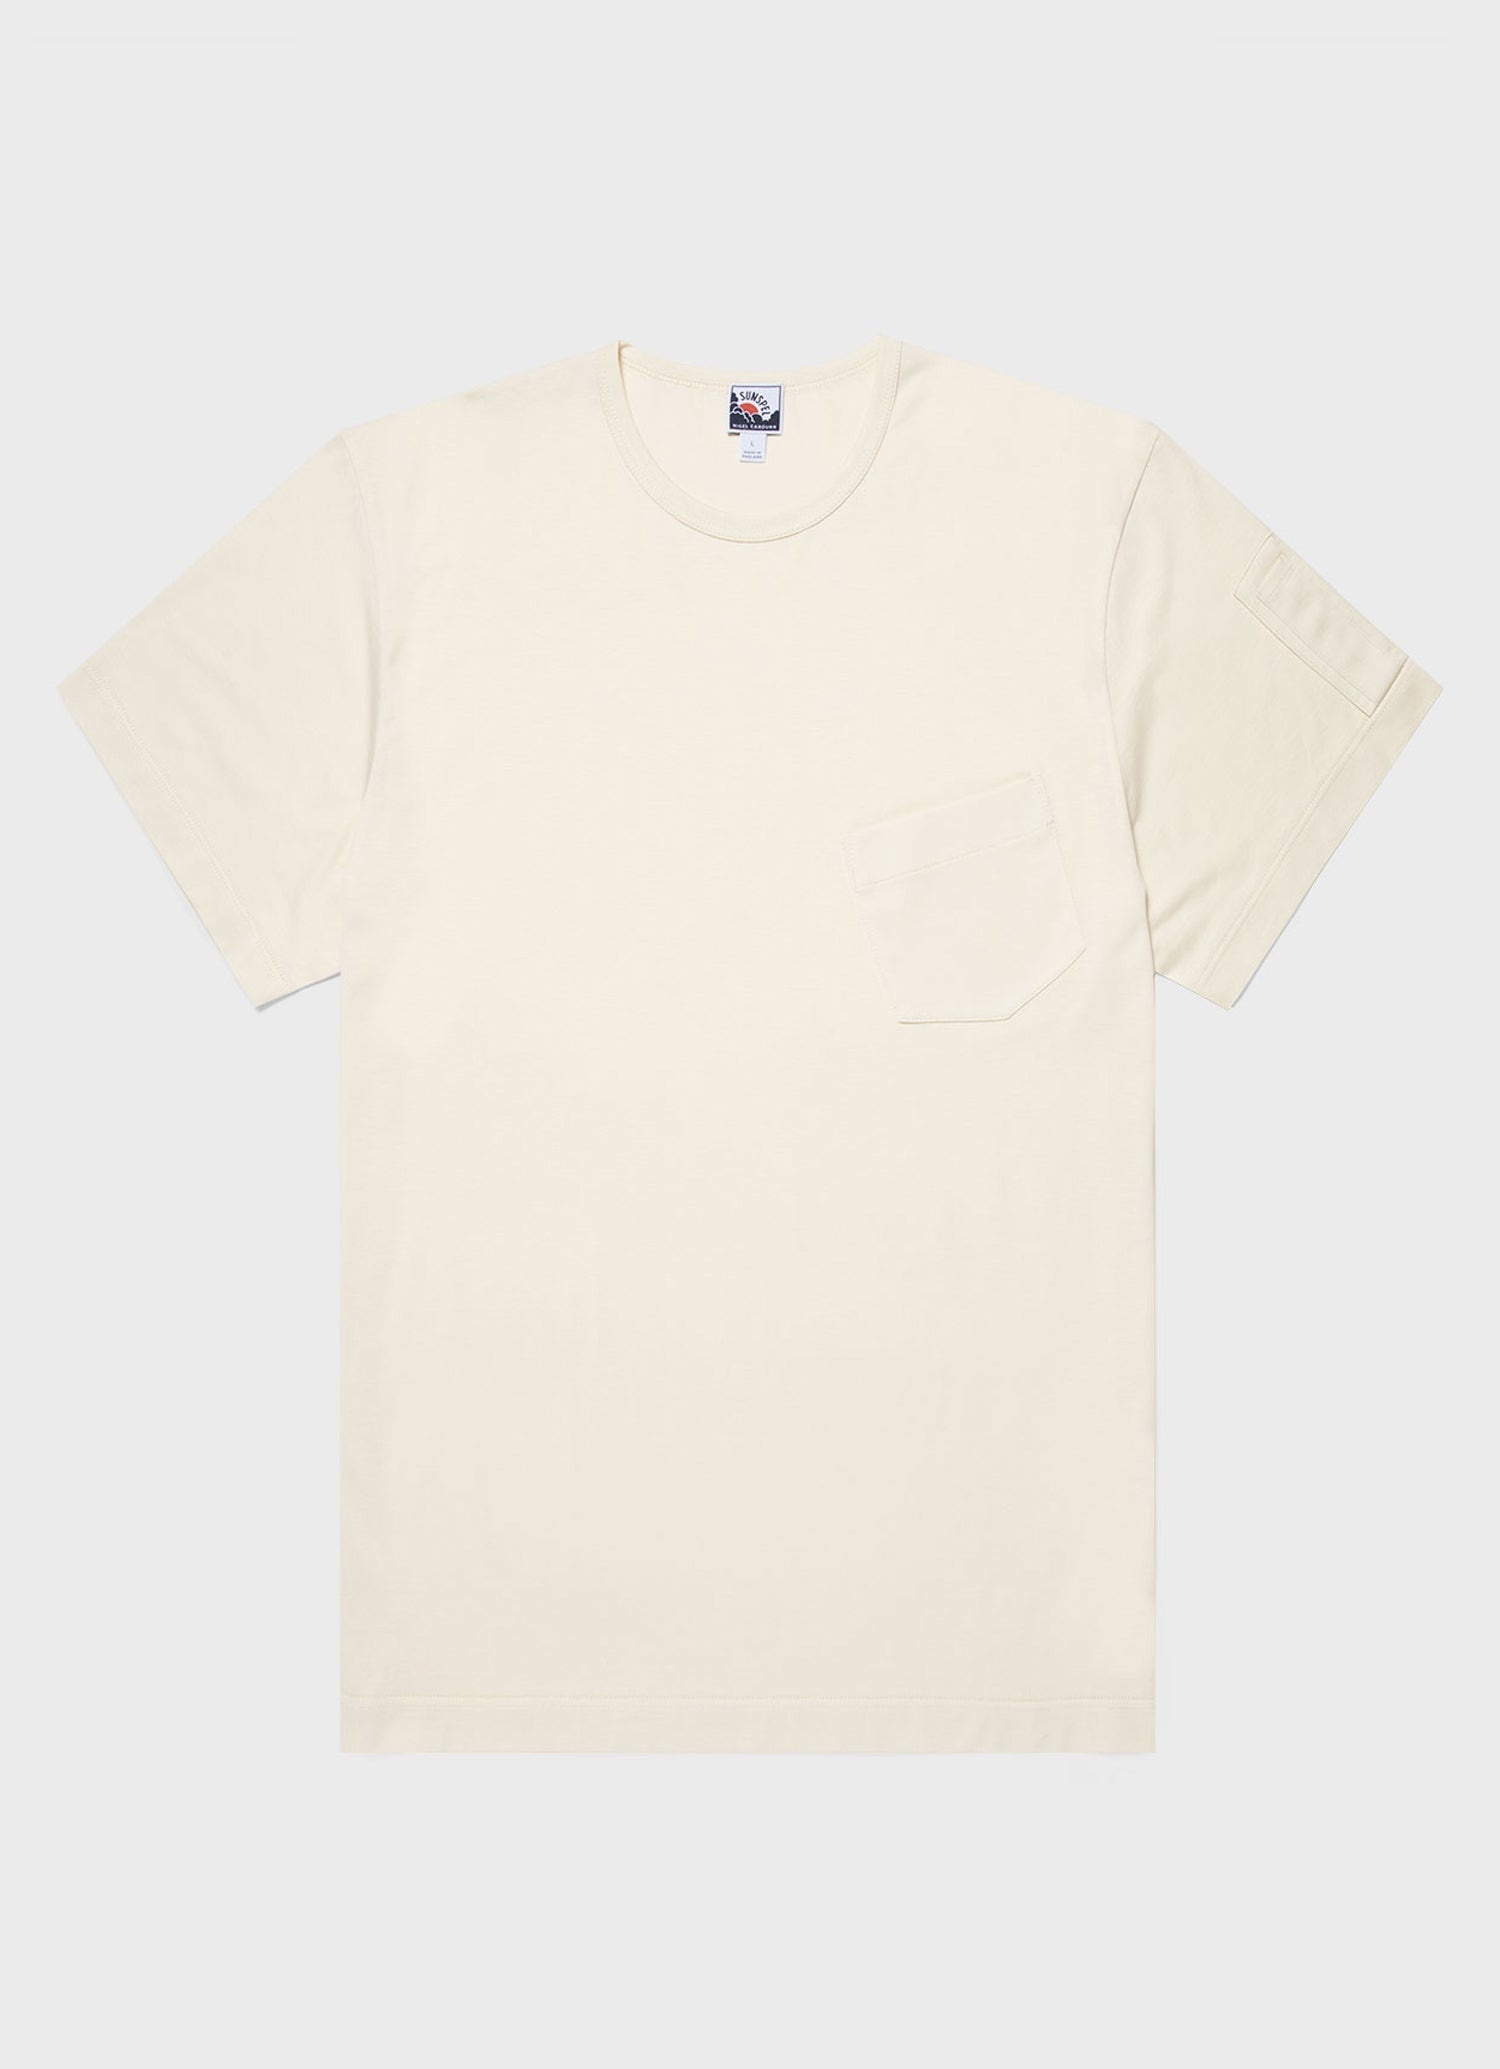 Nigel Cabourn x Sunspel Short Sleeve Pocket T-Shirt in Stone White - 1